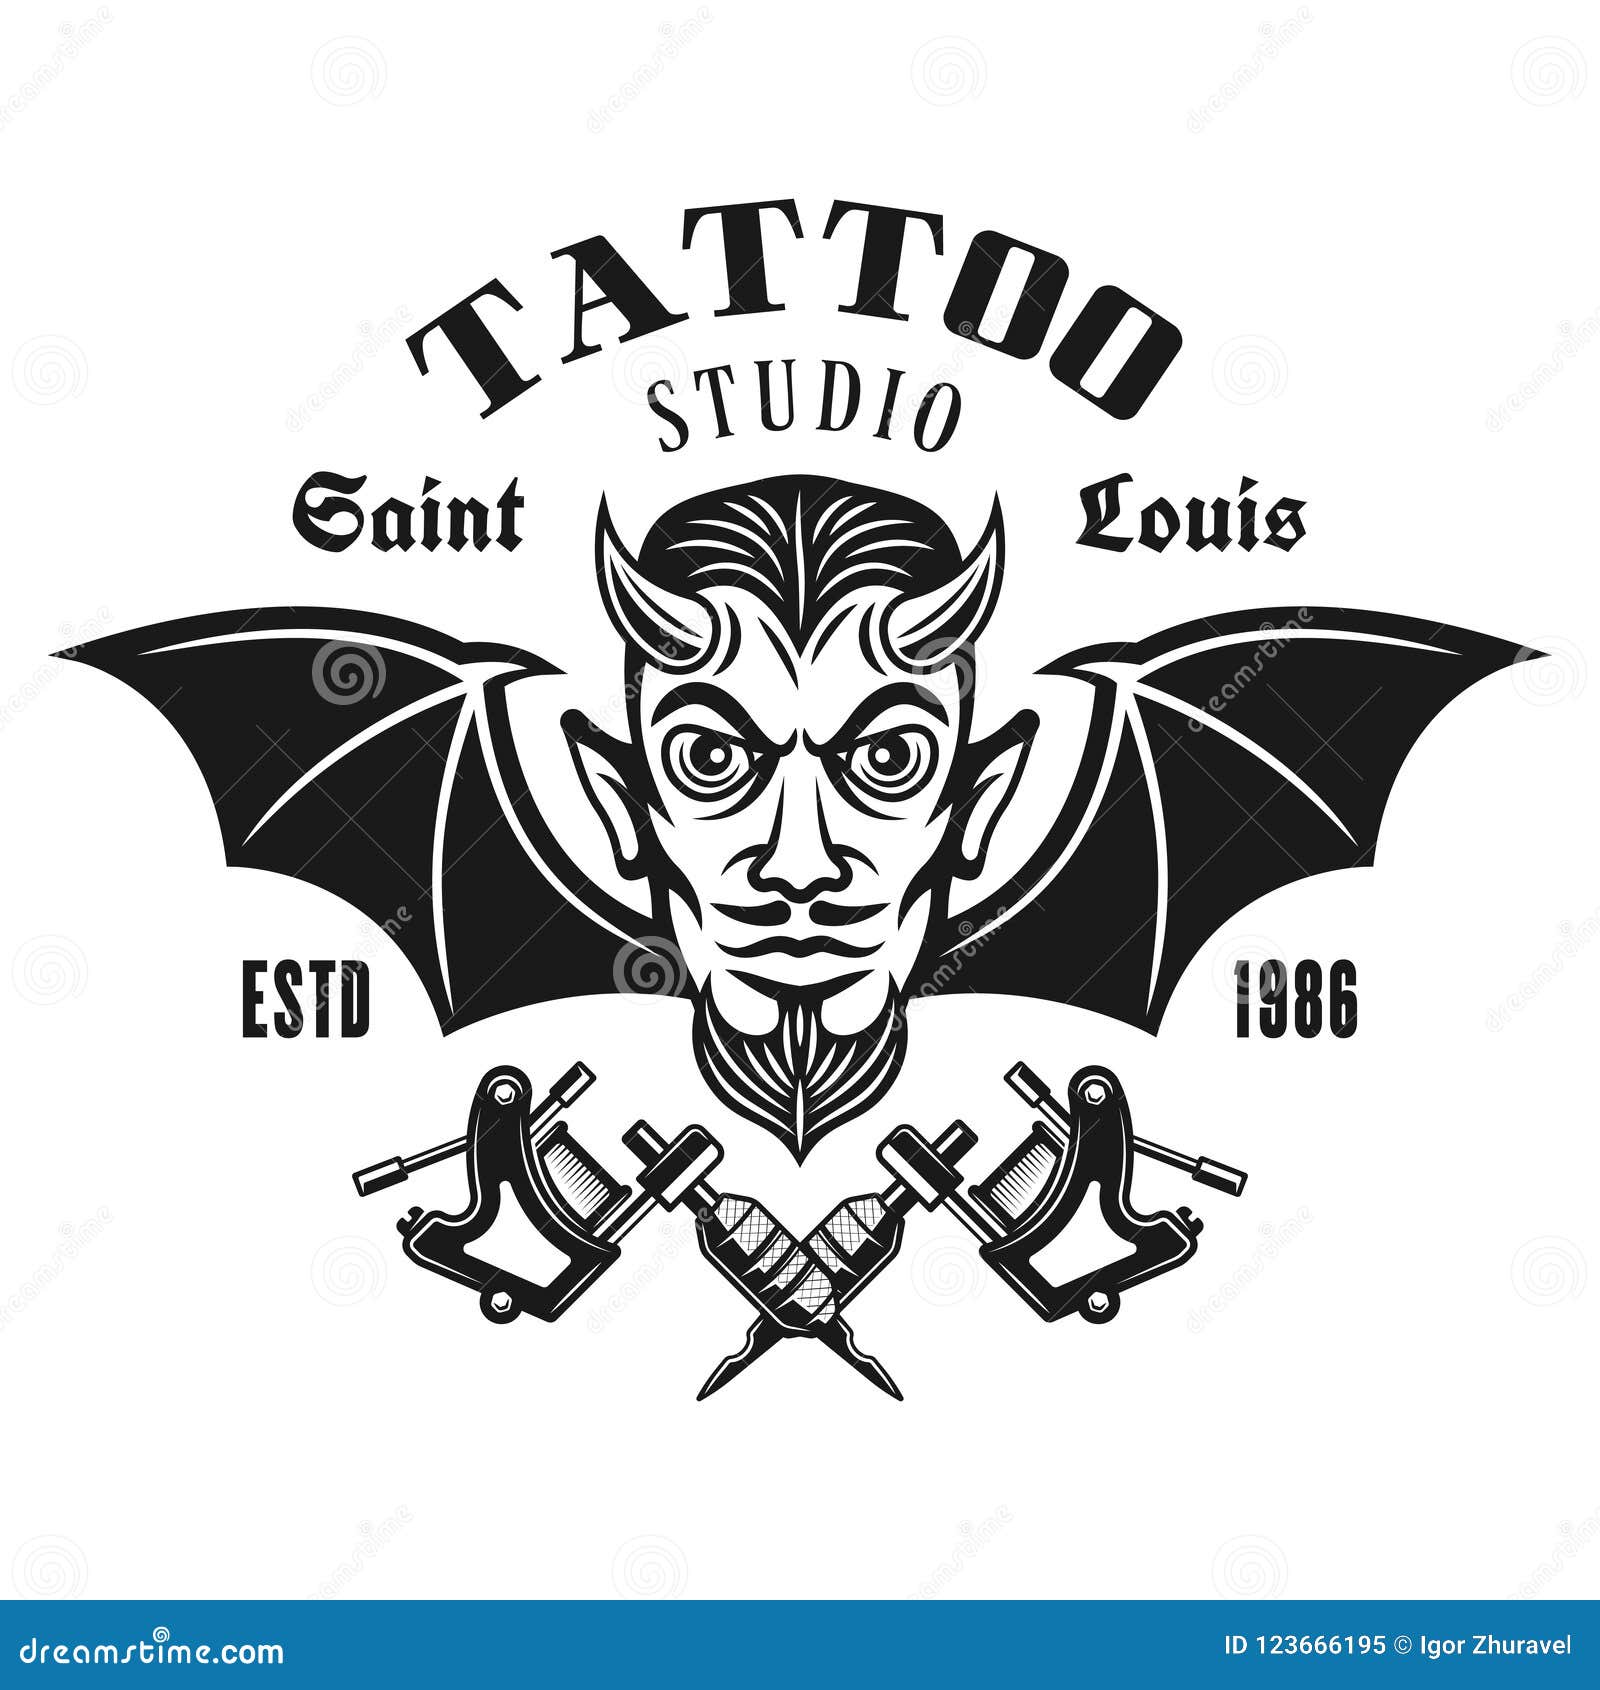 Tattoo Studio Vector Emblem with Horned Devil Head Stock Vector - Illustration of demon, logo: 123666195